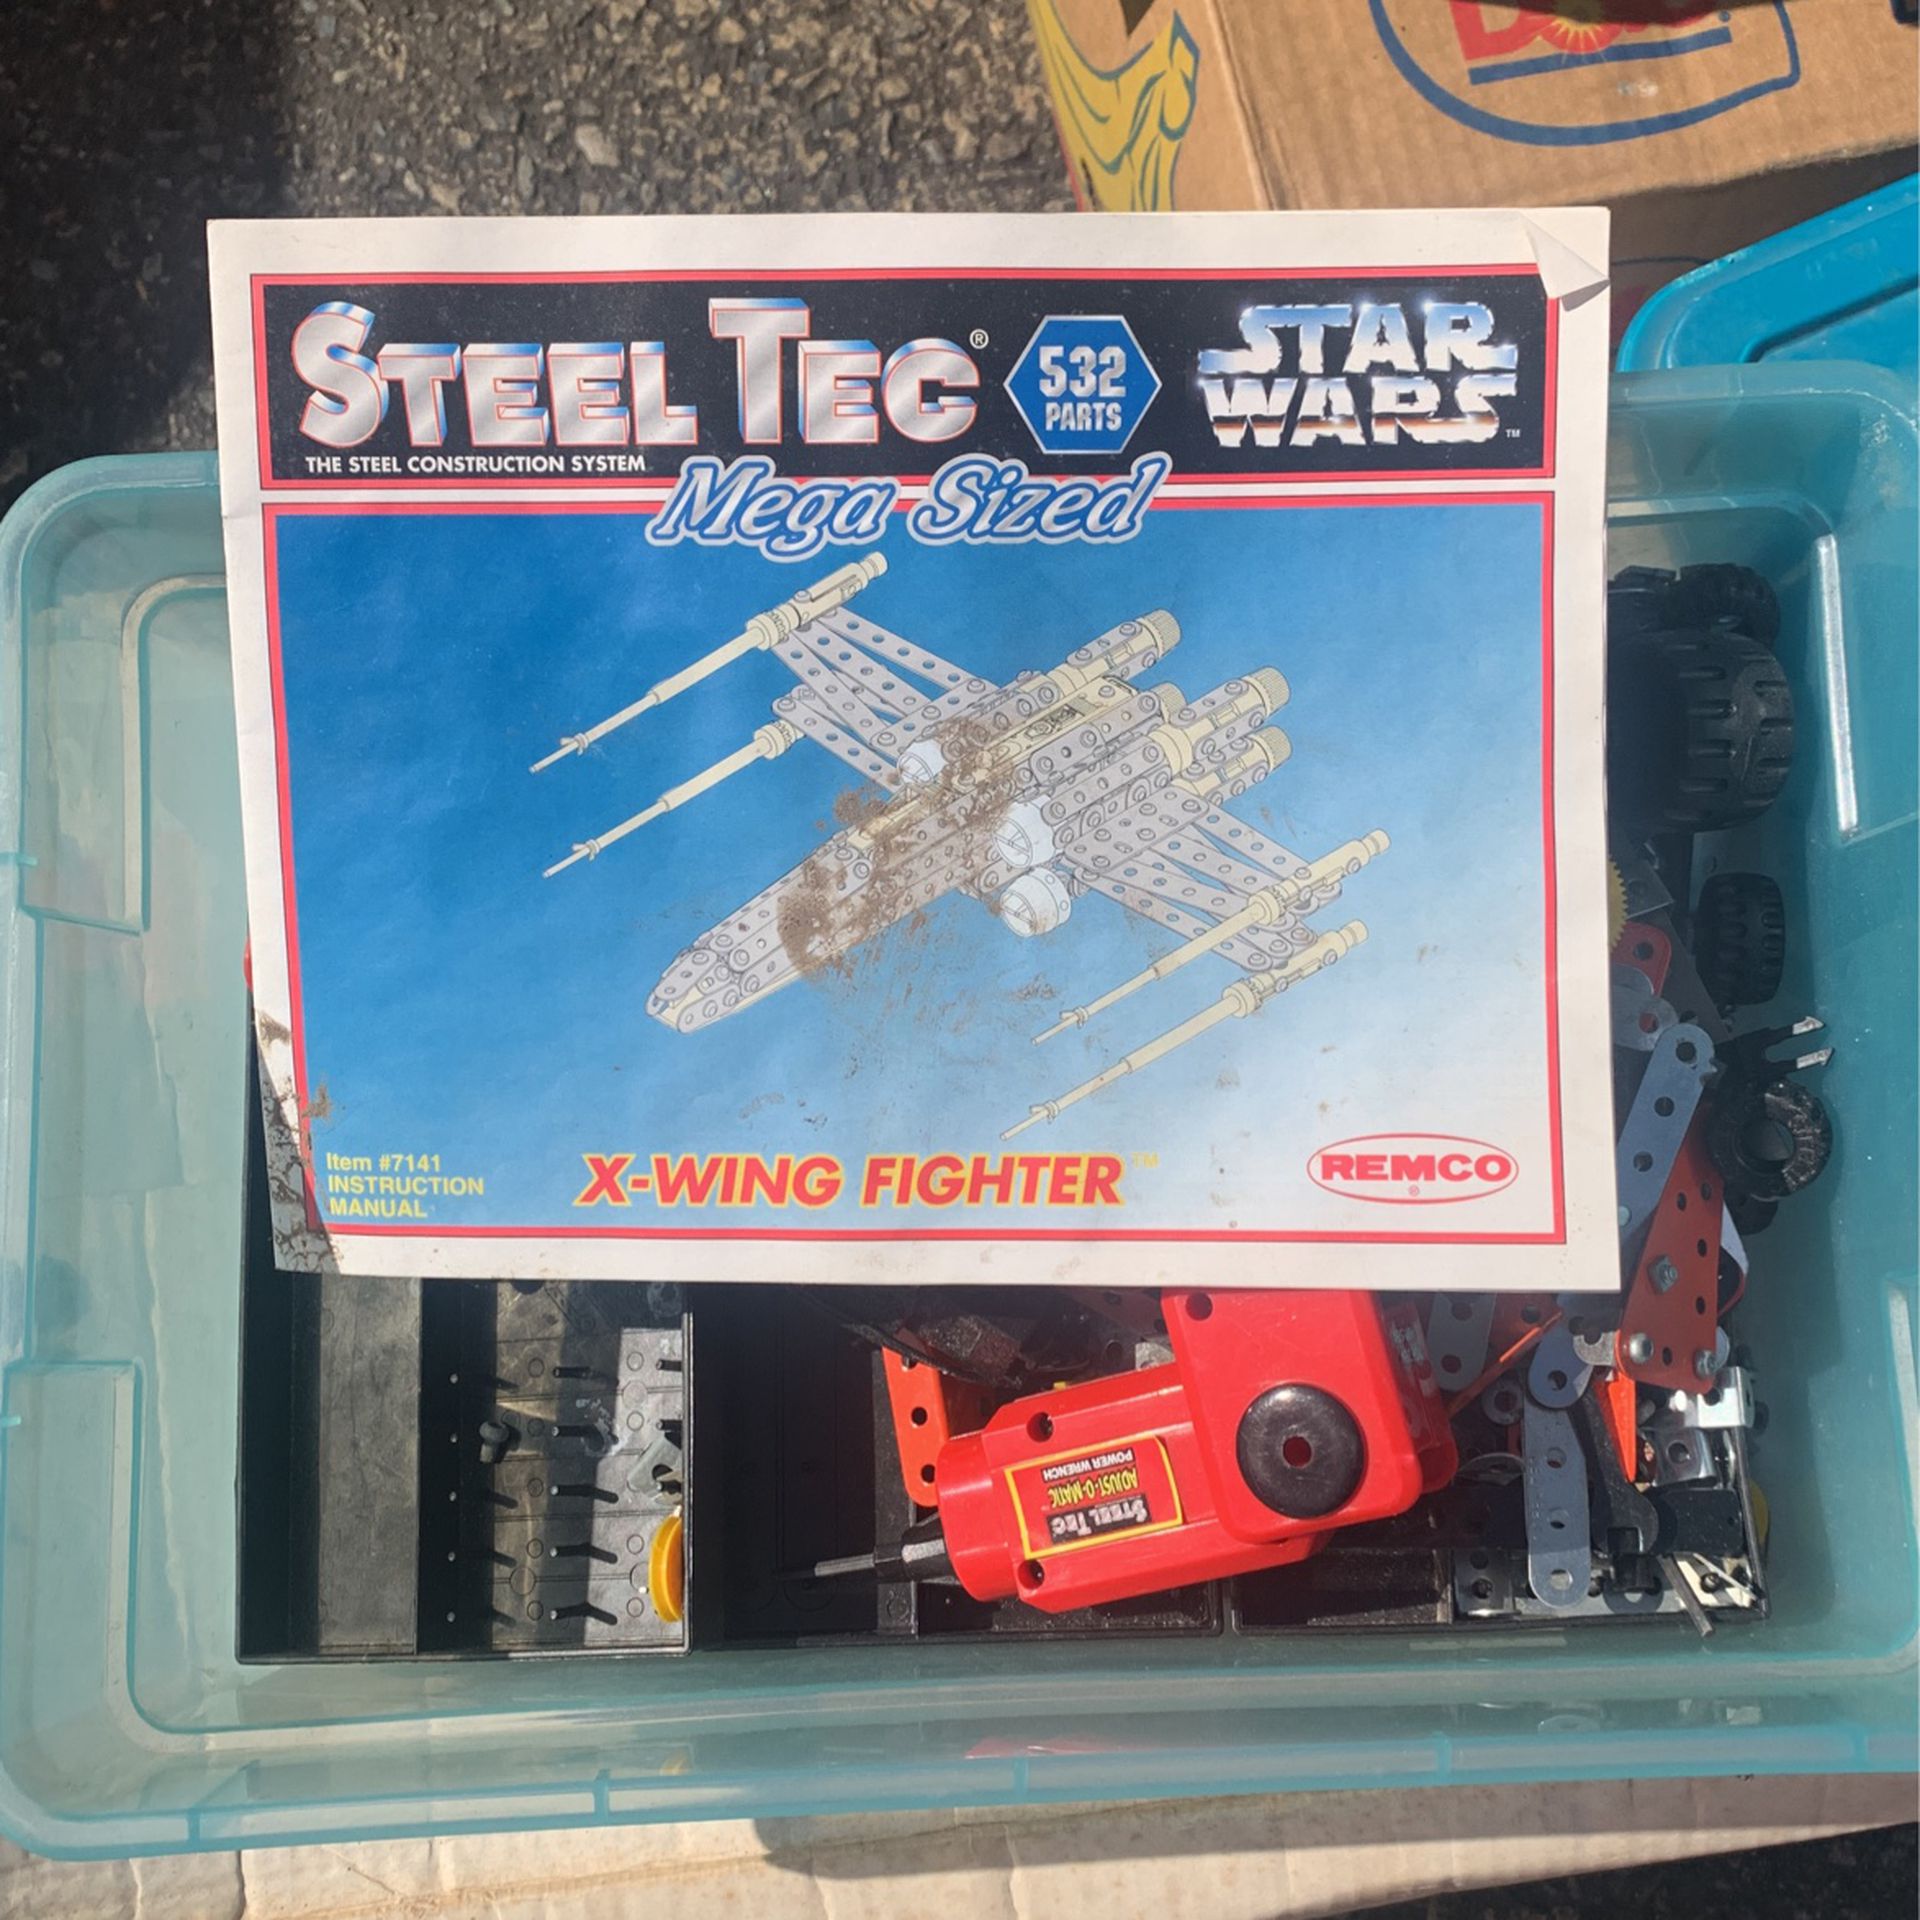 Steel Tec Star Wars X Wing Fighter